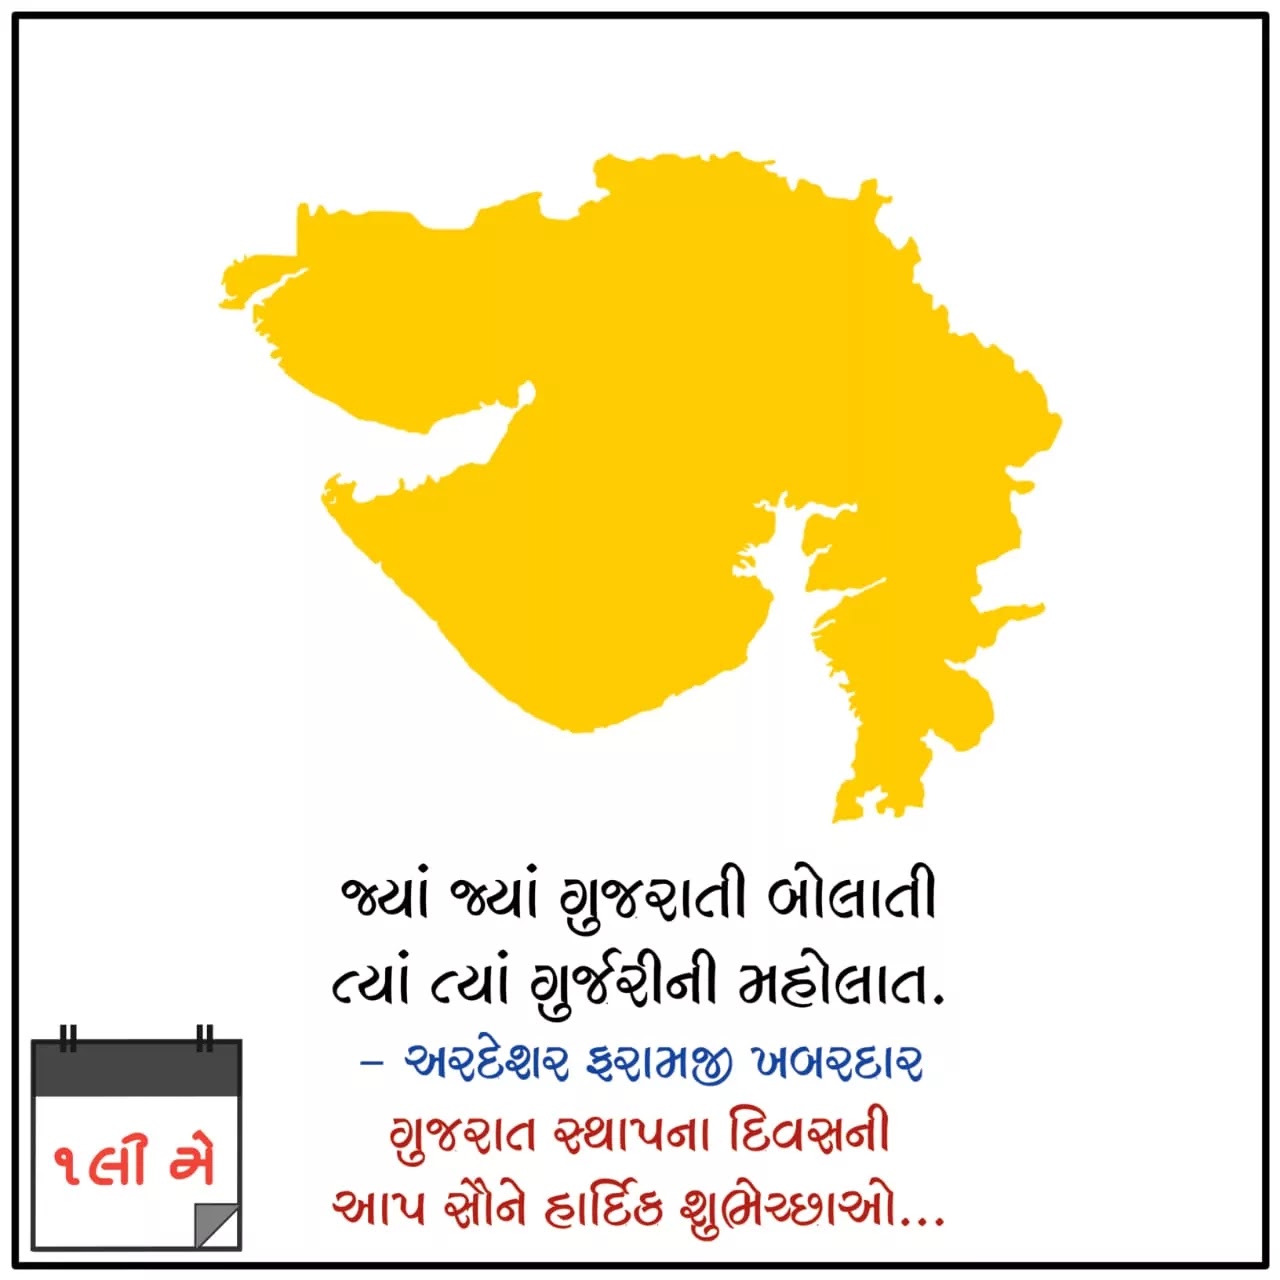 Gujarat Map Picture with Ardeshar Faramji Quotes on Gujarat for Gujarat Sthapana Divas.